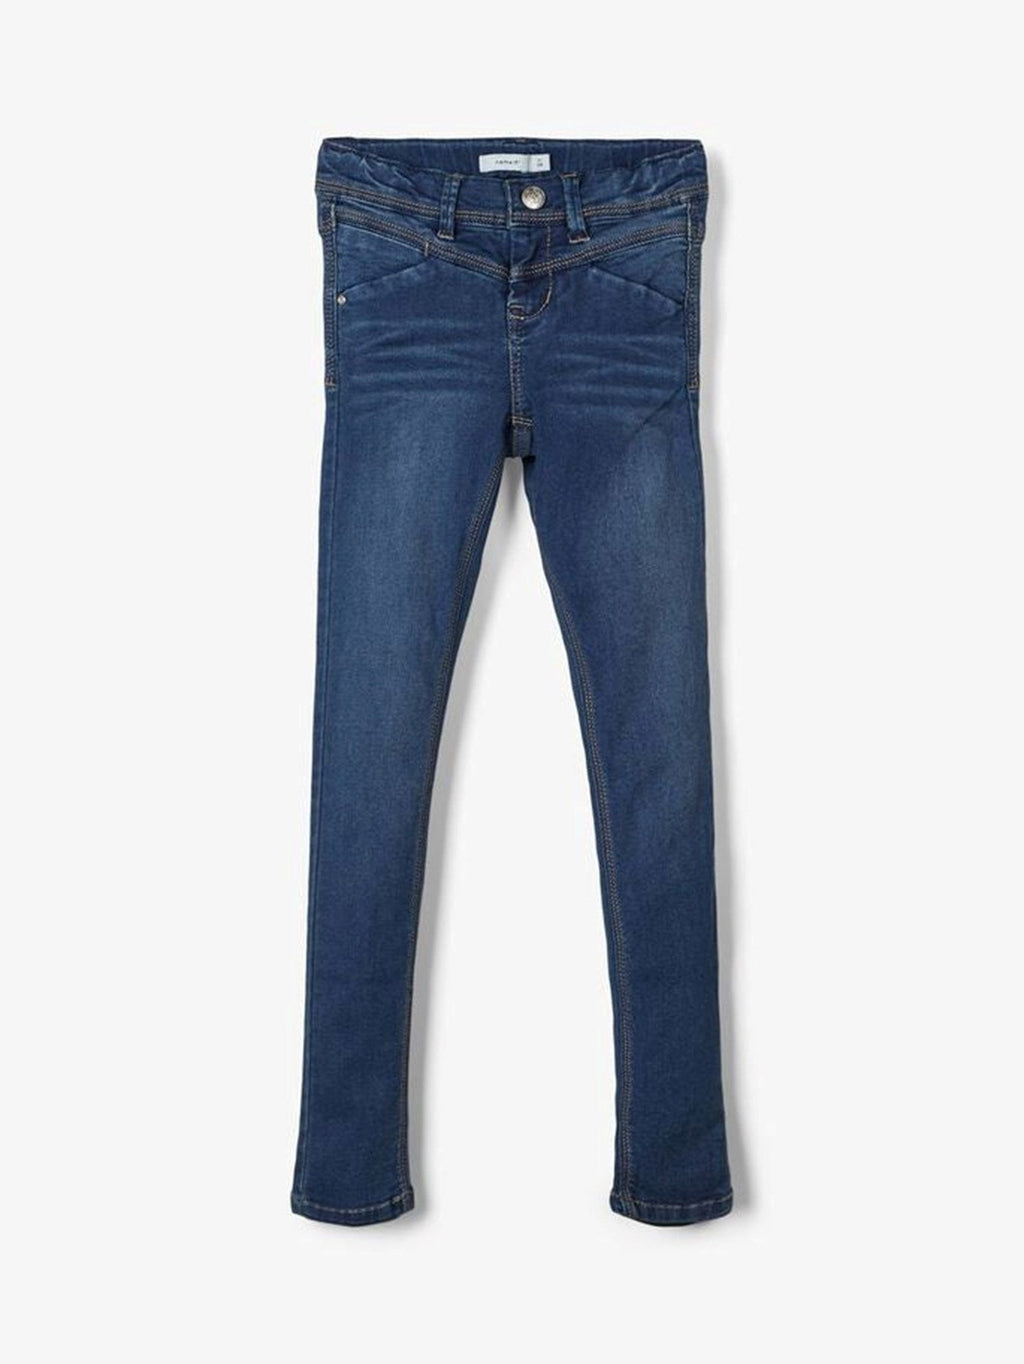 Skinny Fit Jeans - dunkelblauer Jeans